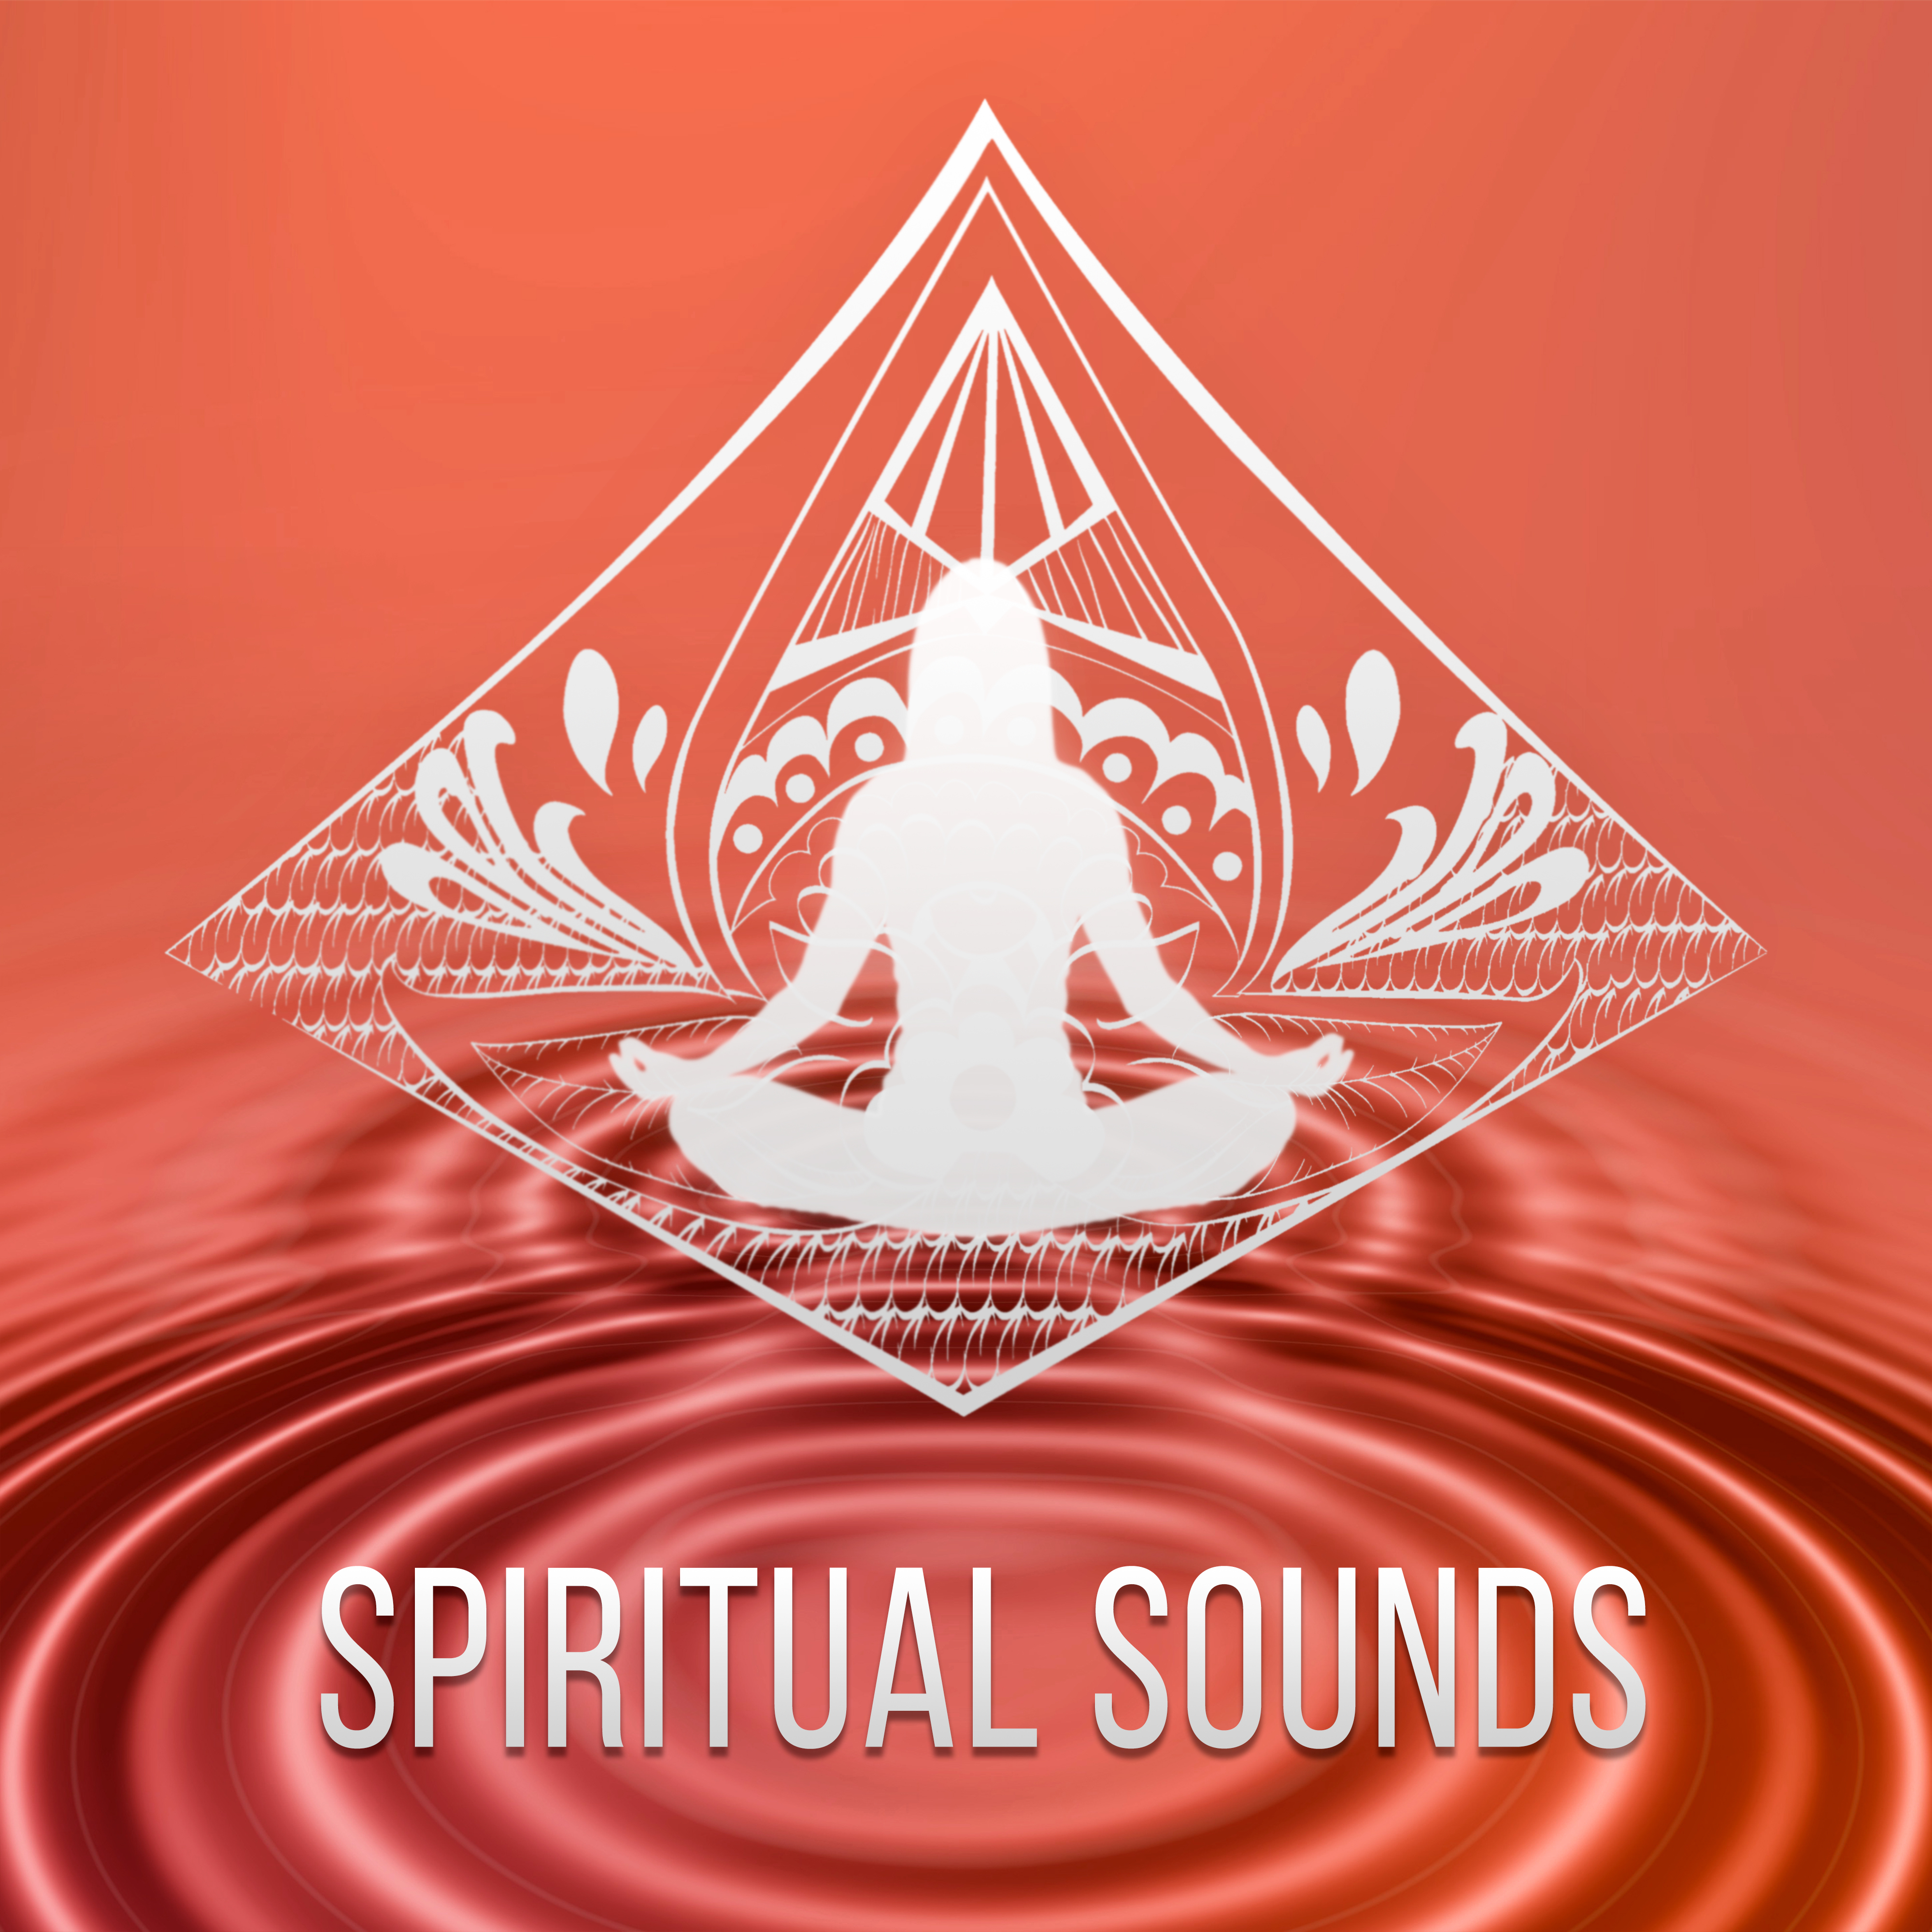 Spiritual Sounds - Mindfulness Meditation Practices, Namaste Yoga & Healing Sounds of Nature